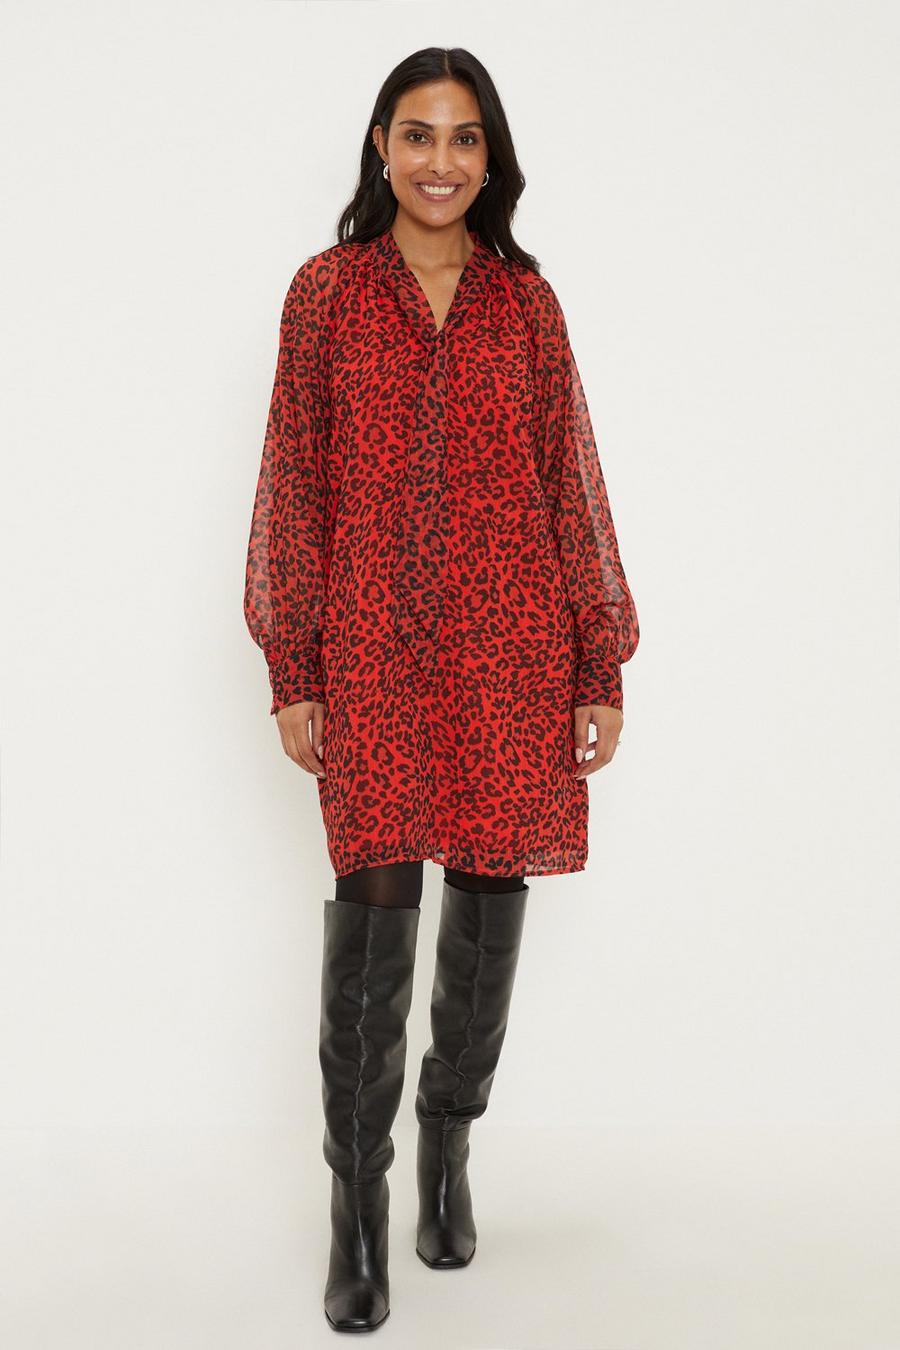 Petite Red Leopard Print Tie Neck Shift Dress